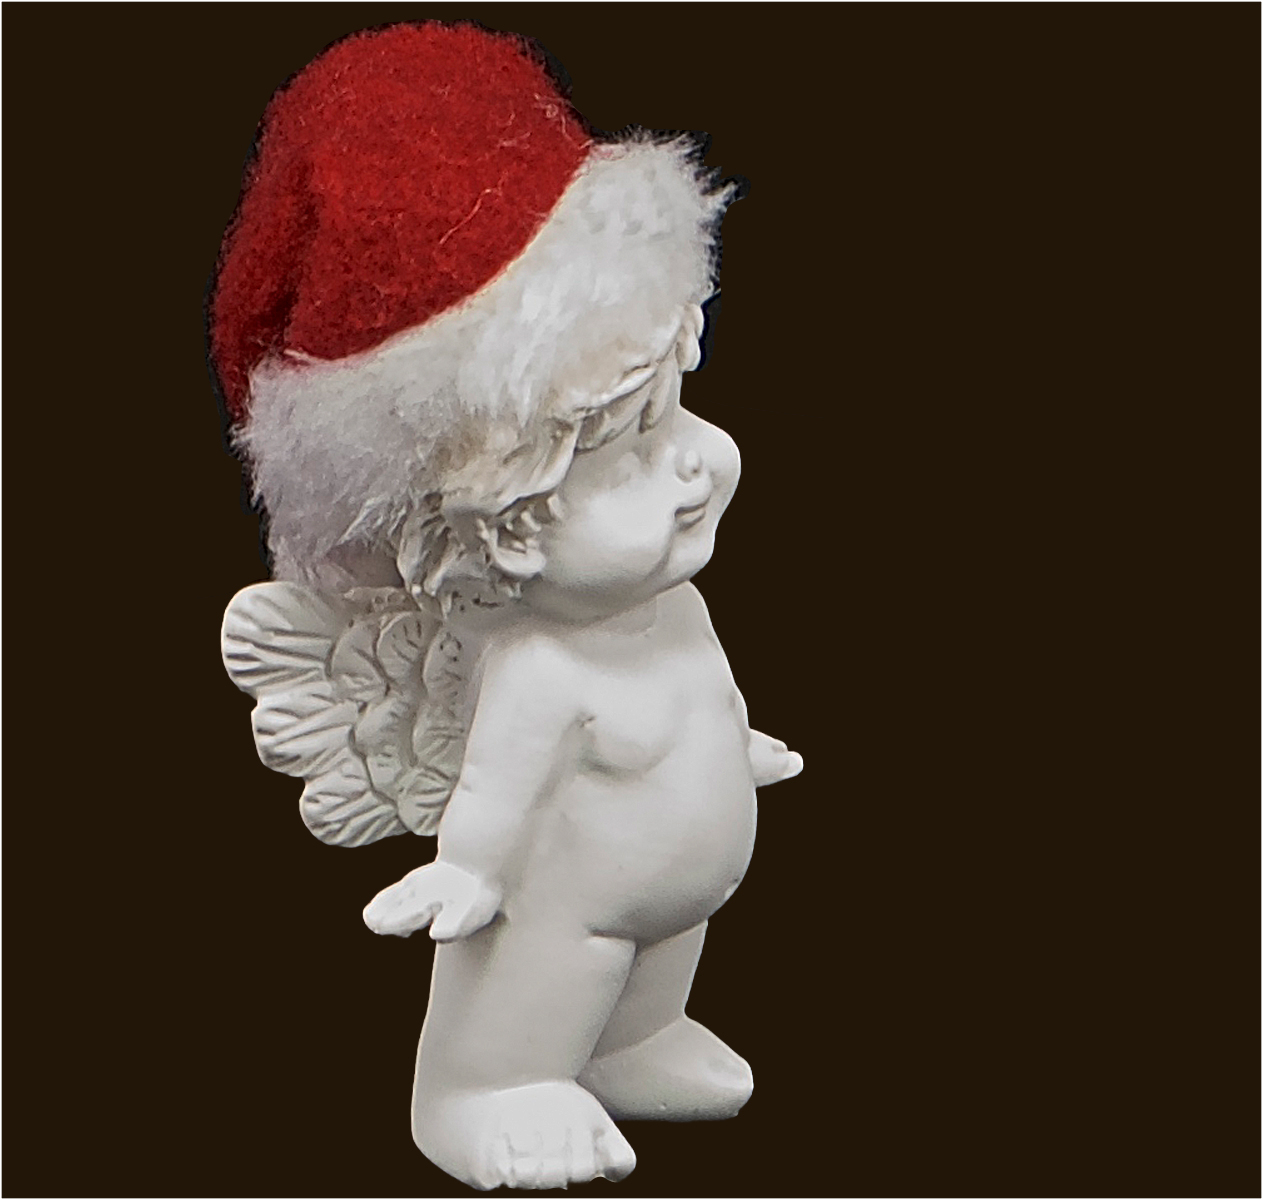 IGOR mit Santa-Mütze (Figur 4) Höhe: 11 cm